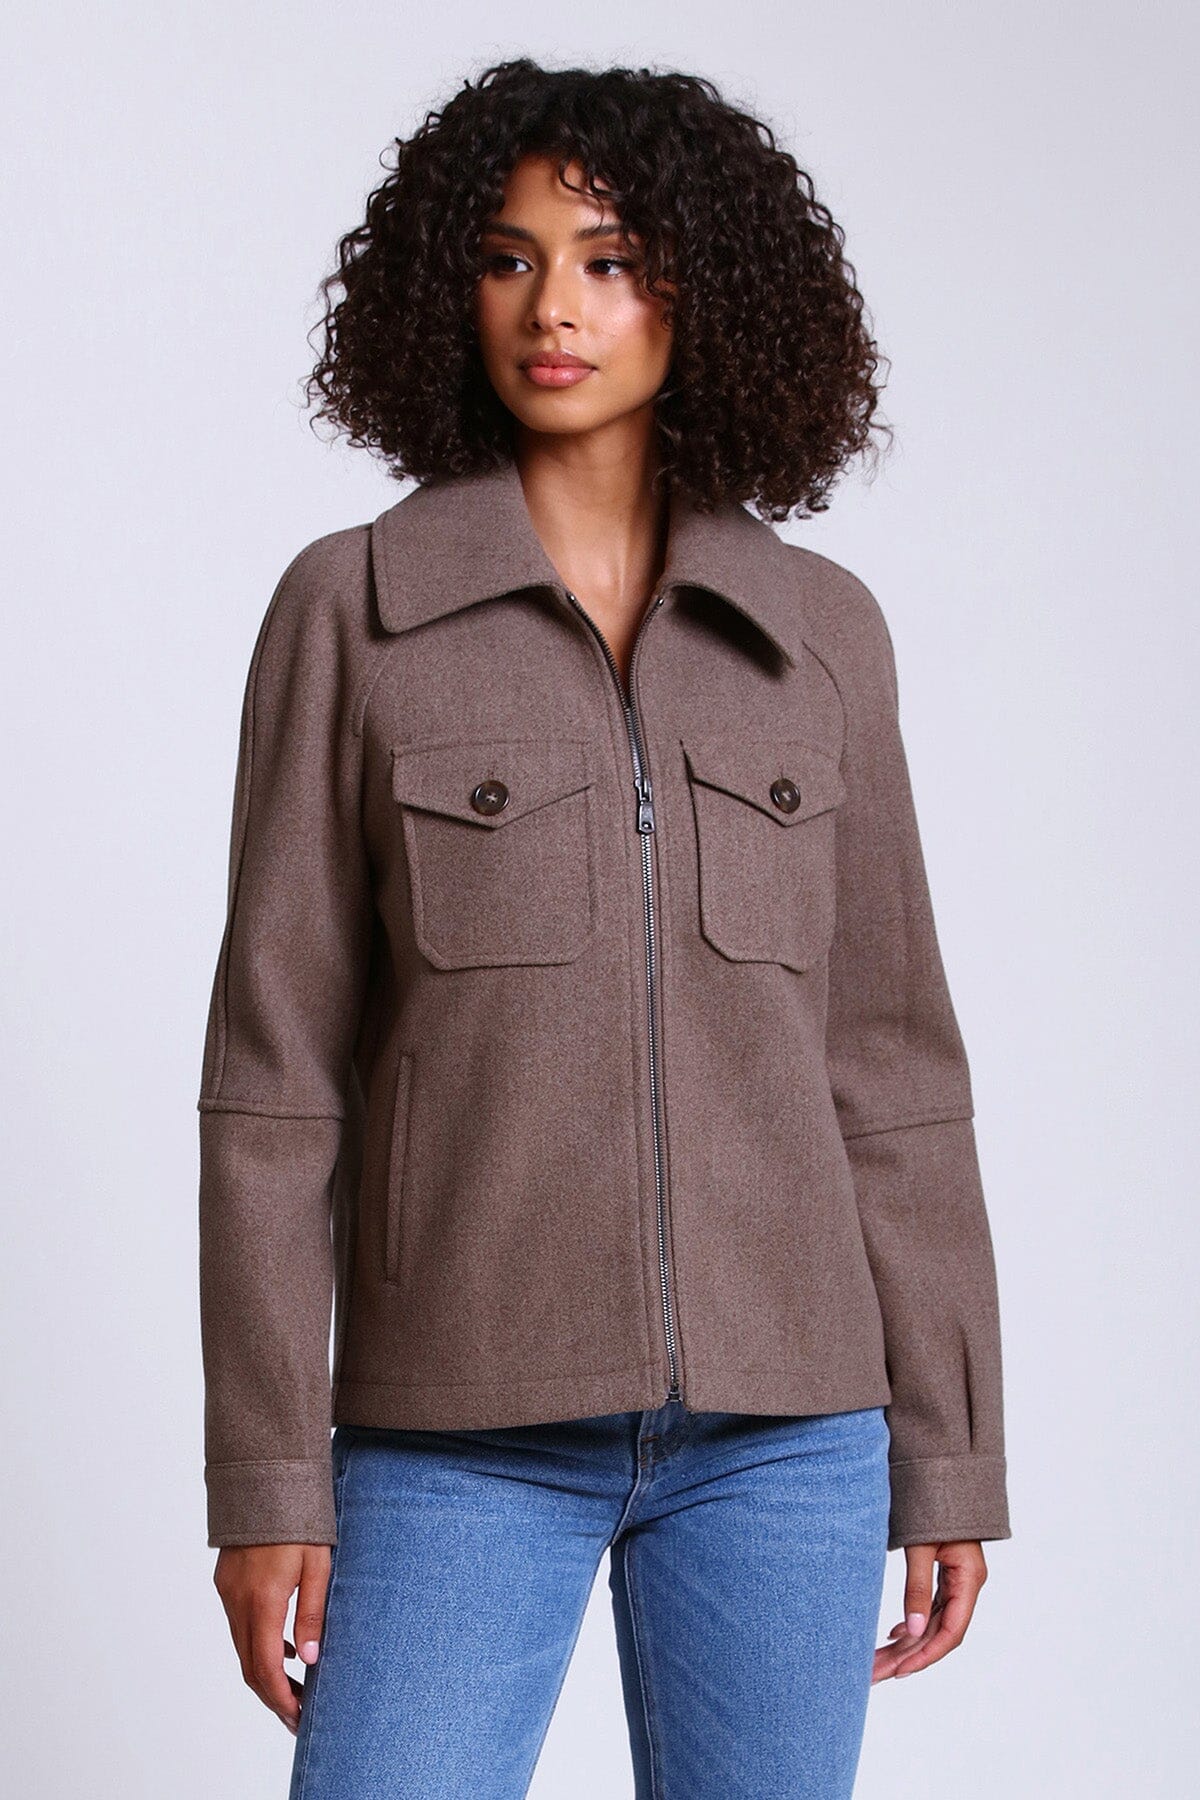 relaxed full zip front jacket shacket mocha brown - women's figure flattering office to date night coats jackets shackets 